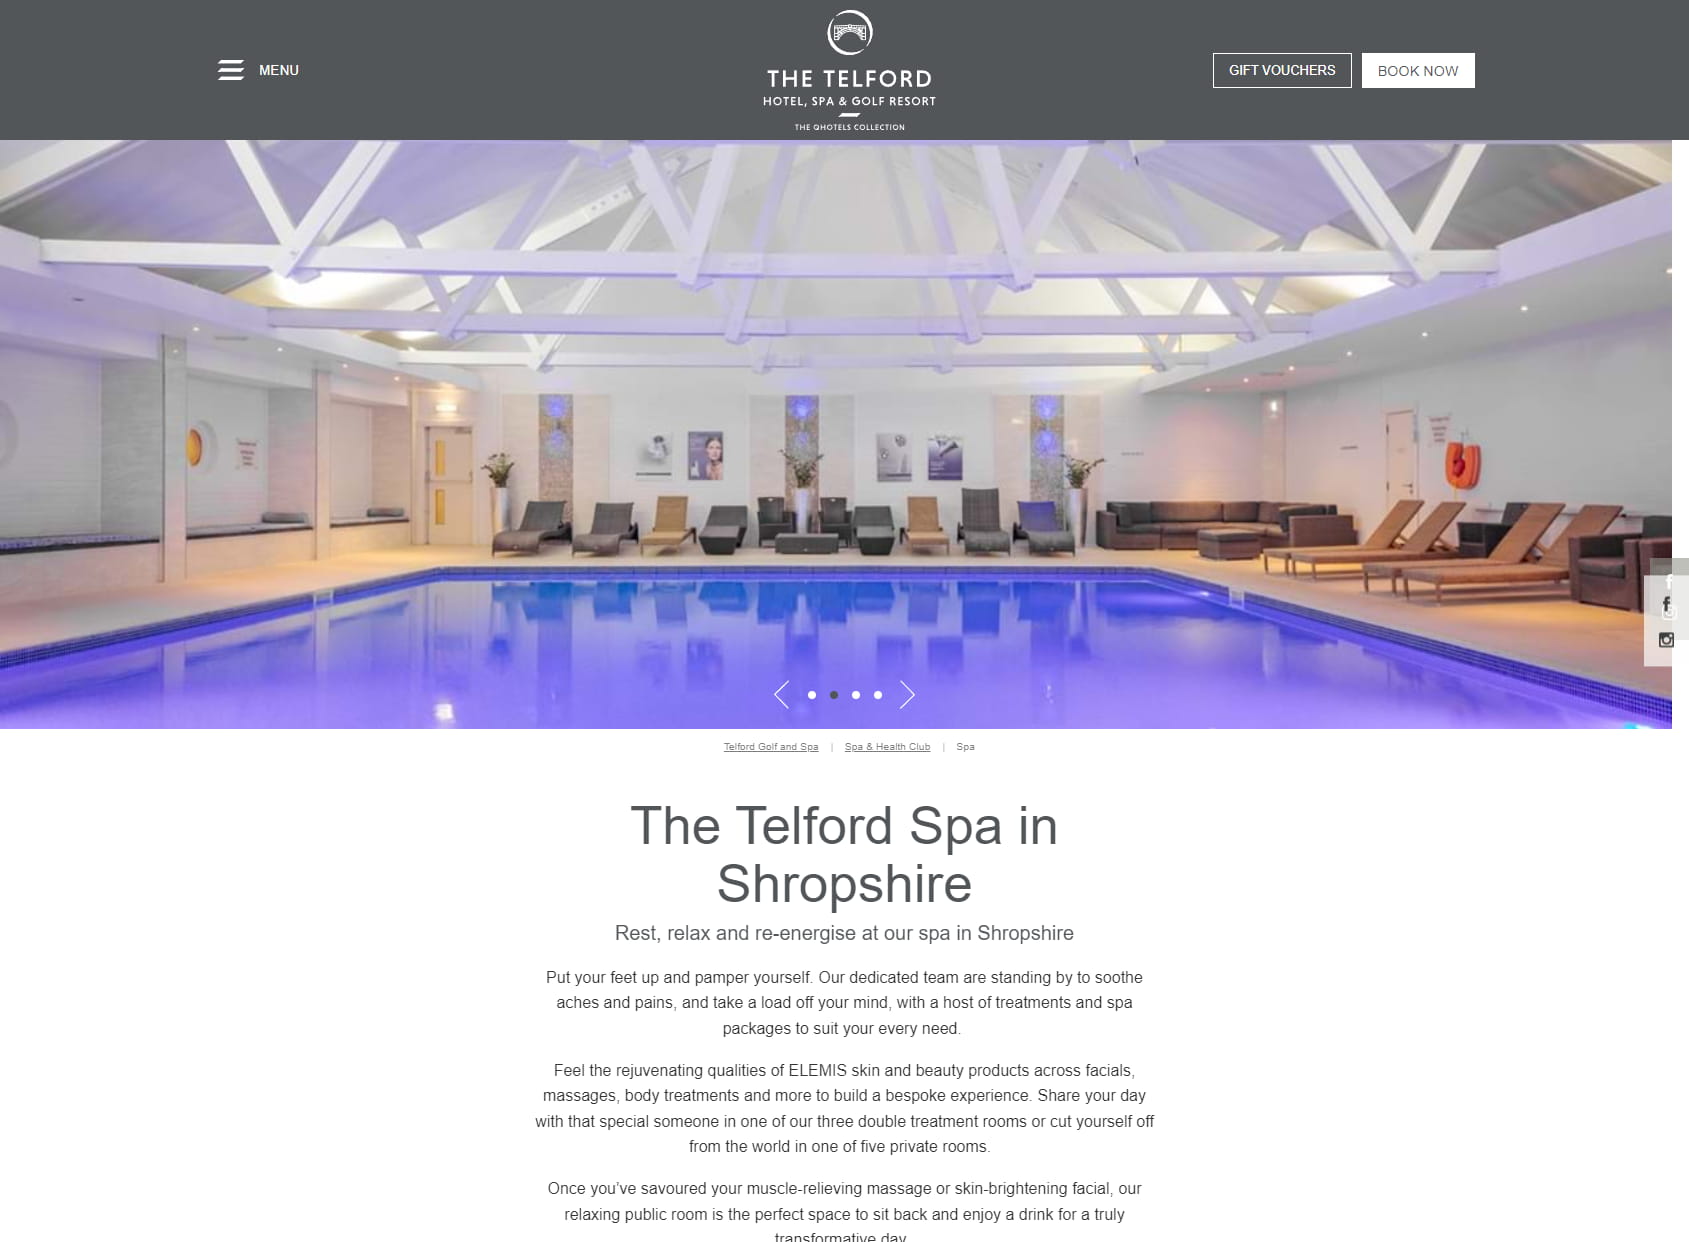 The Spa At Telford Hotel